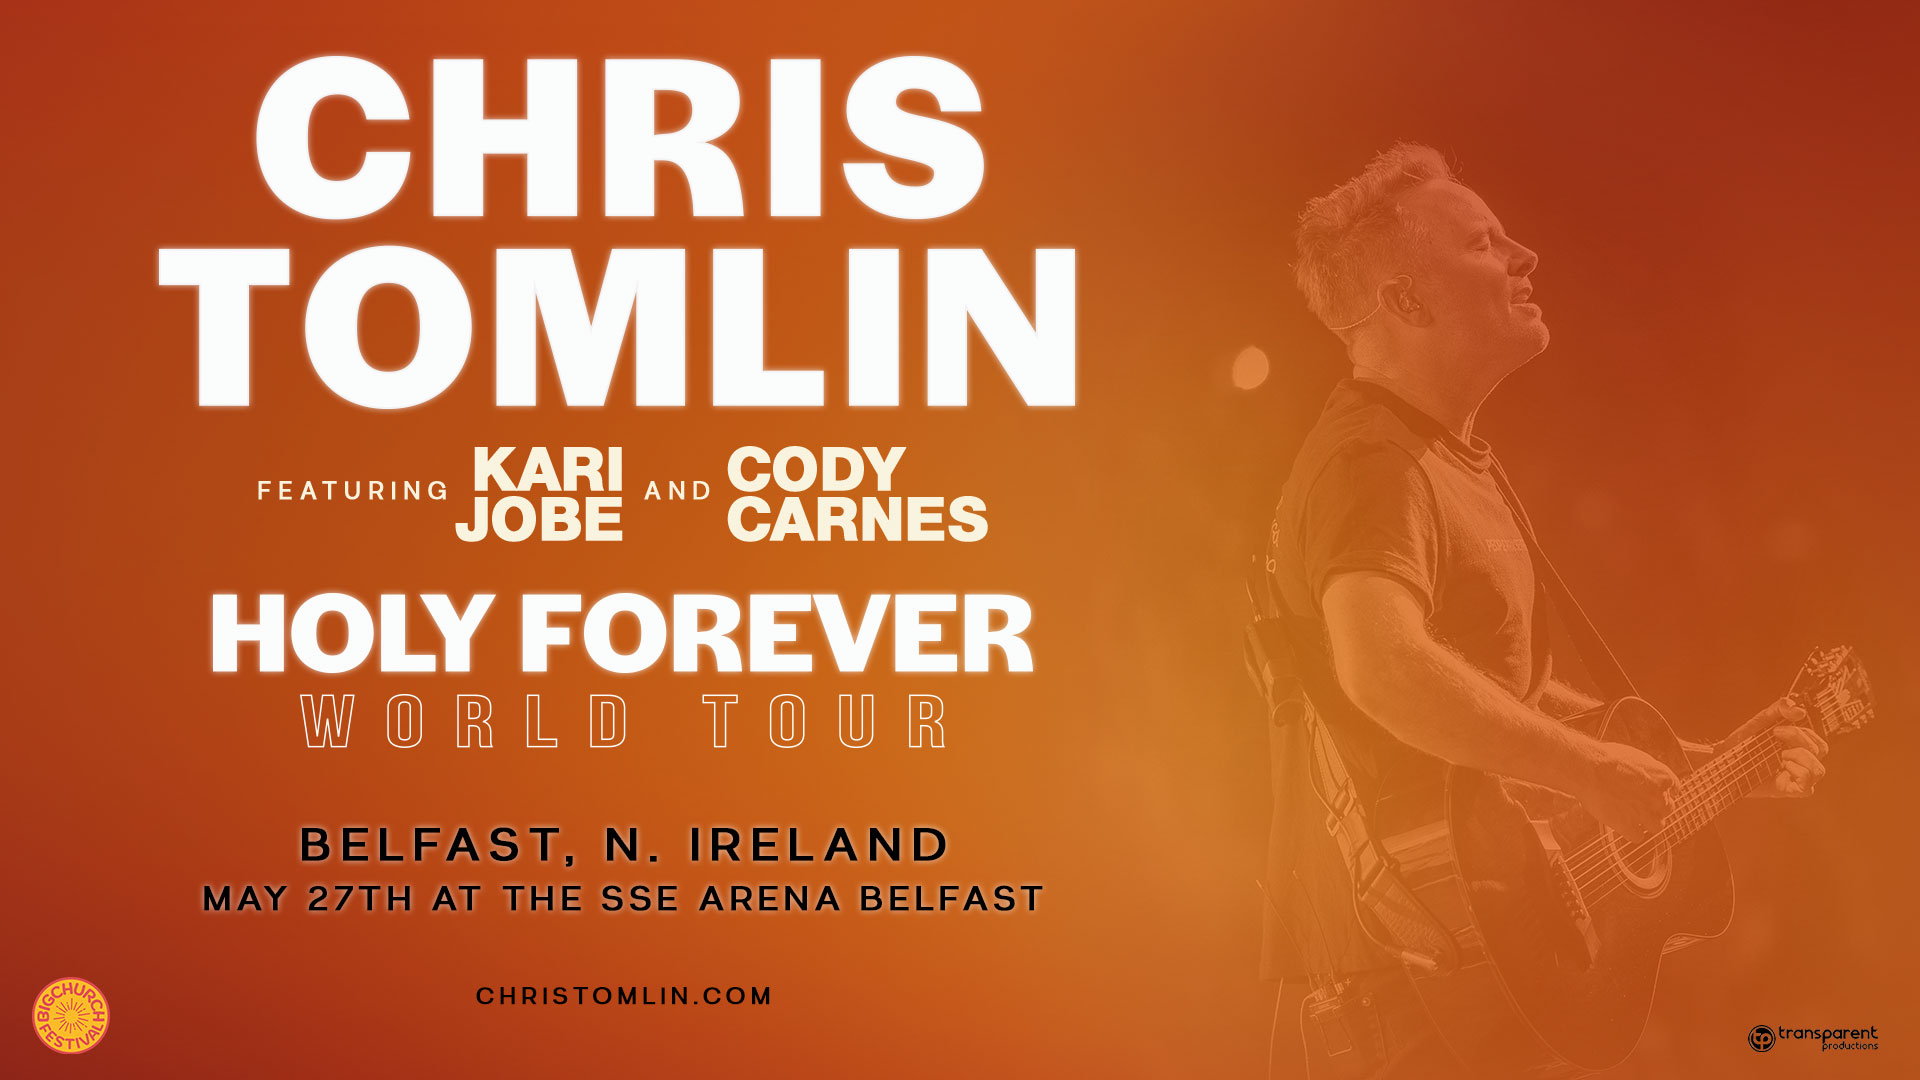 Chris Tomlin Holy Forever World Tour Belfast, N. Ireland May 27